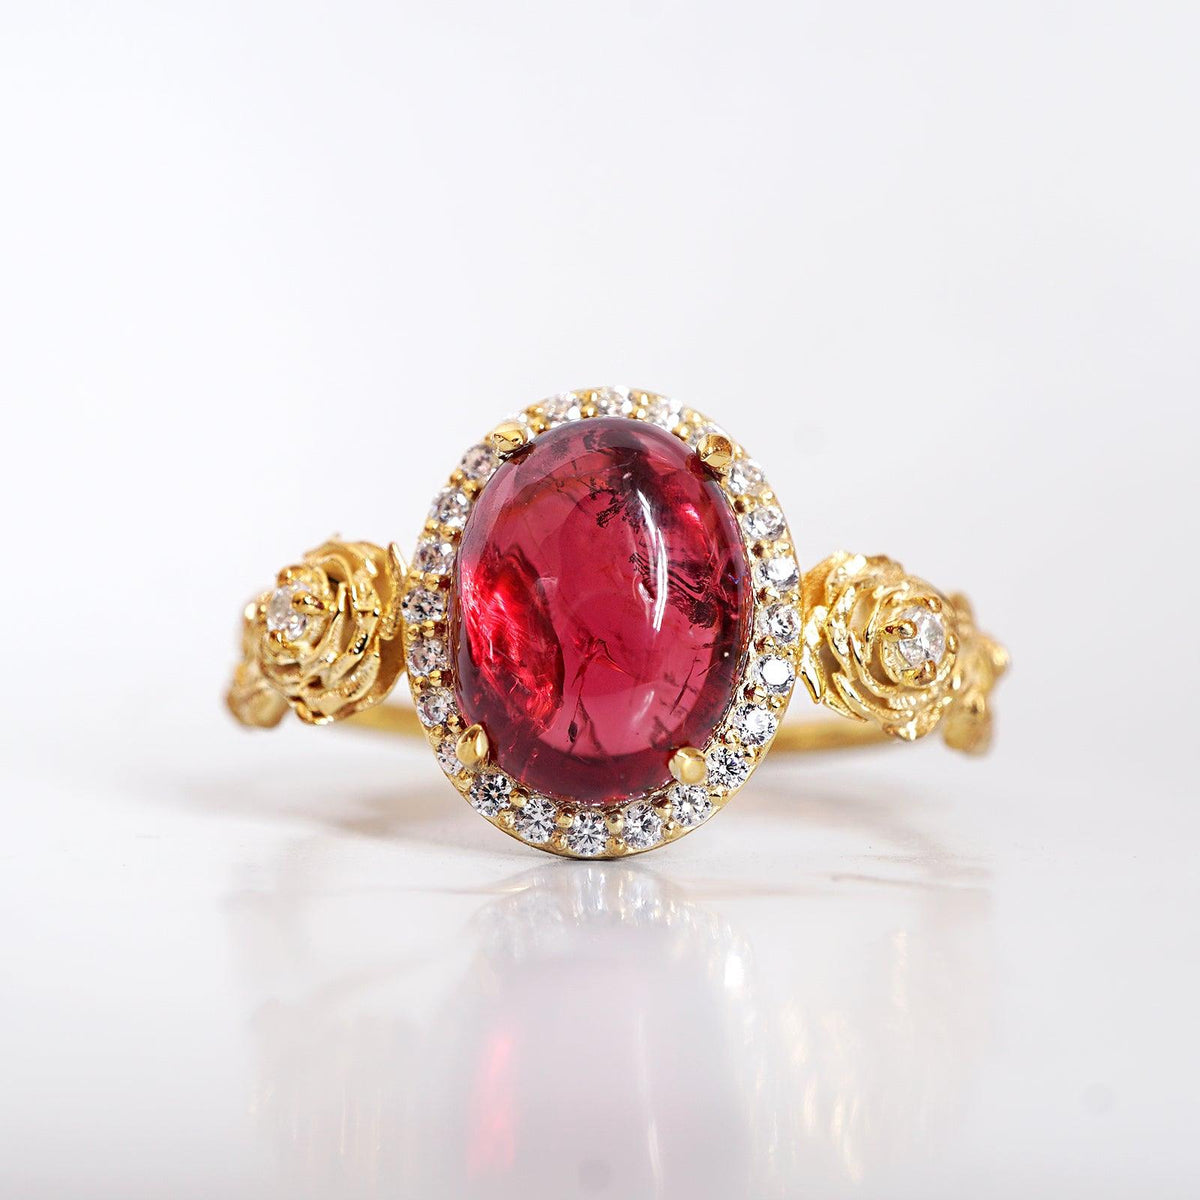 American Beauty Spinel Rose Diamond Ring - Tippy Taste Jewelry